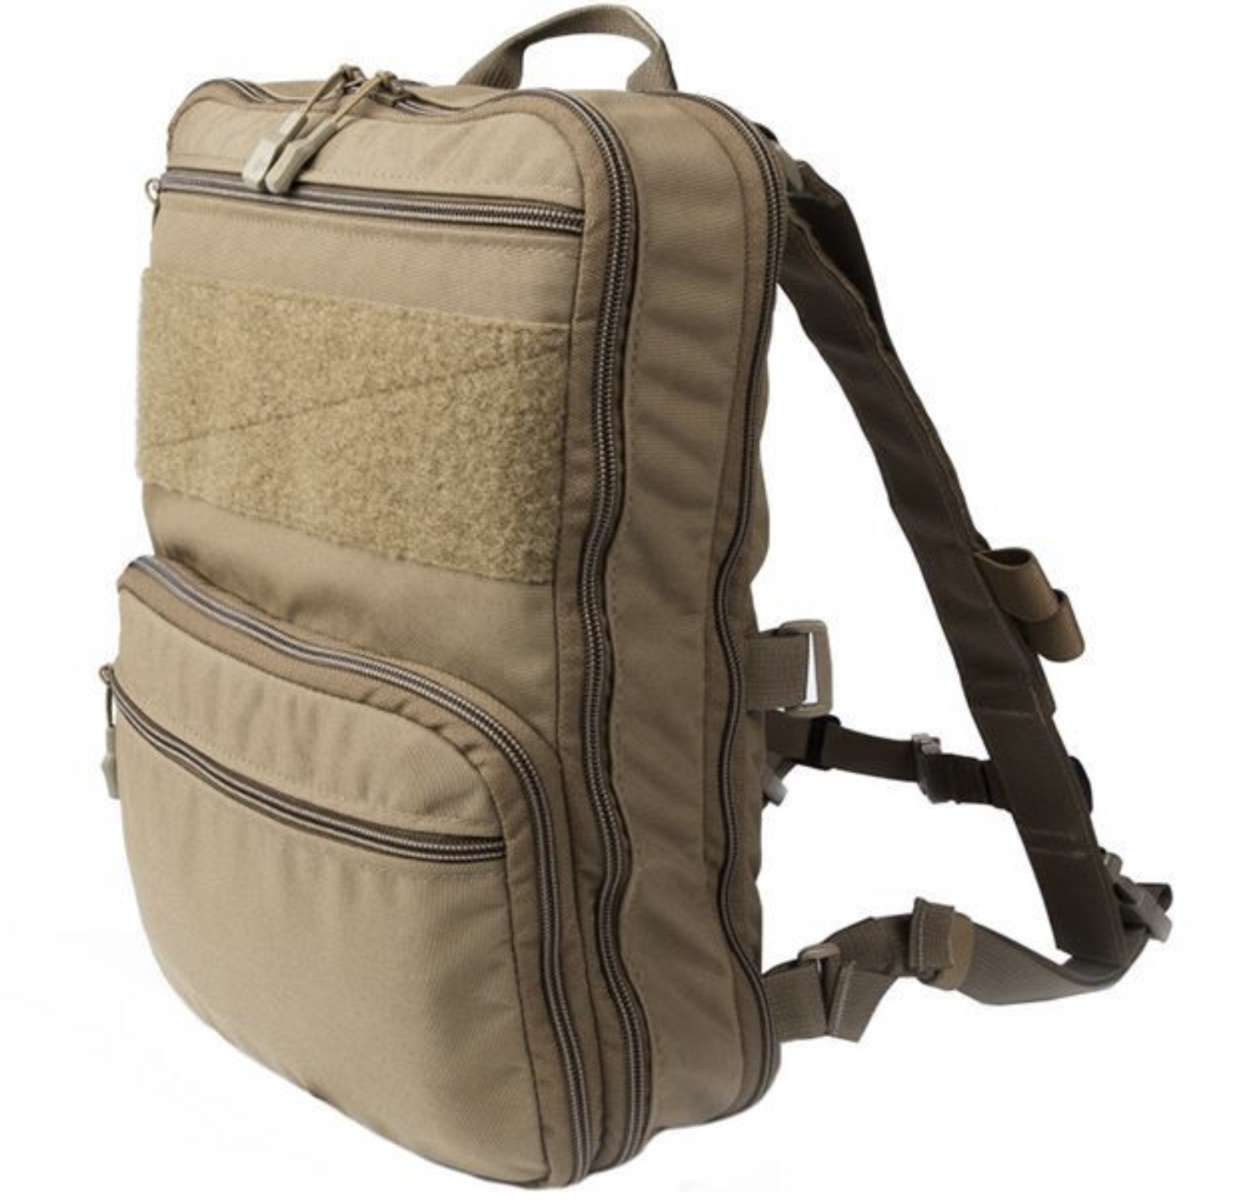 Big foot flatpack plus assault backpack (tan) – Extreme Airsoft